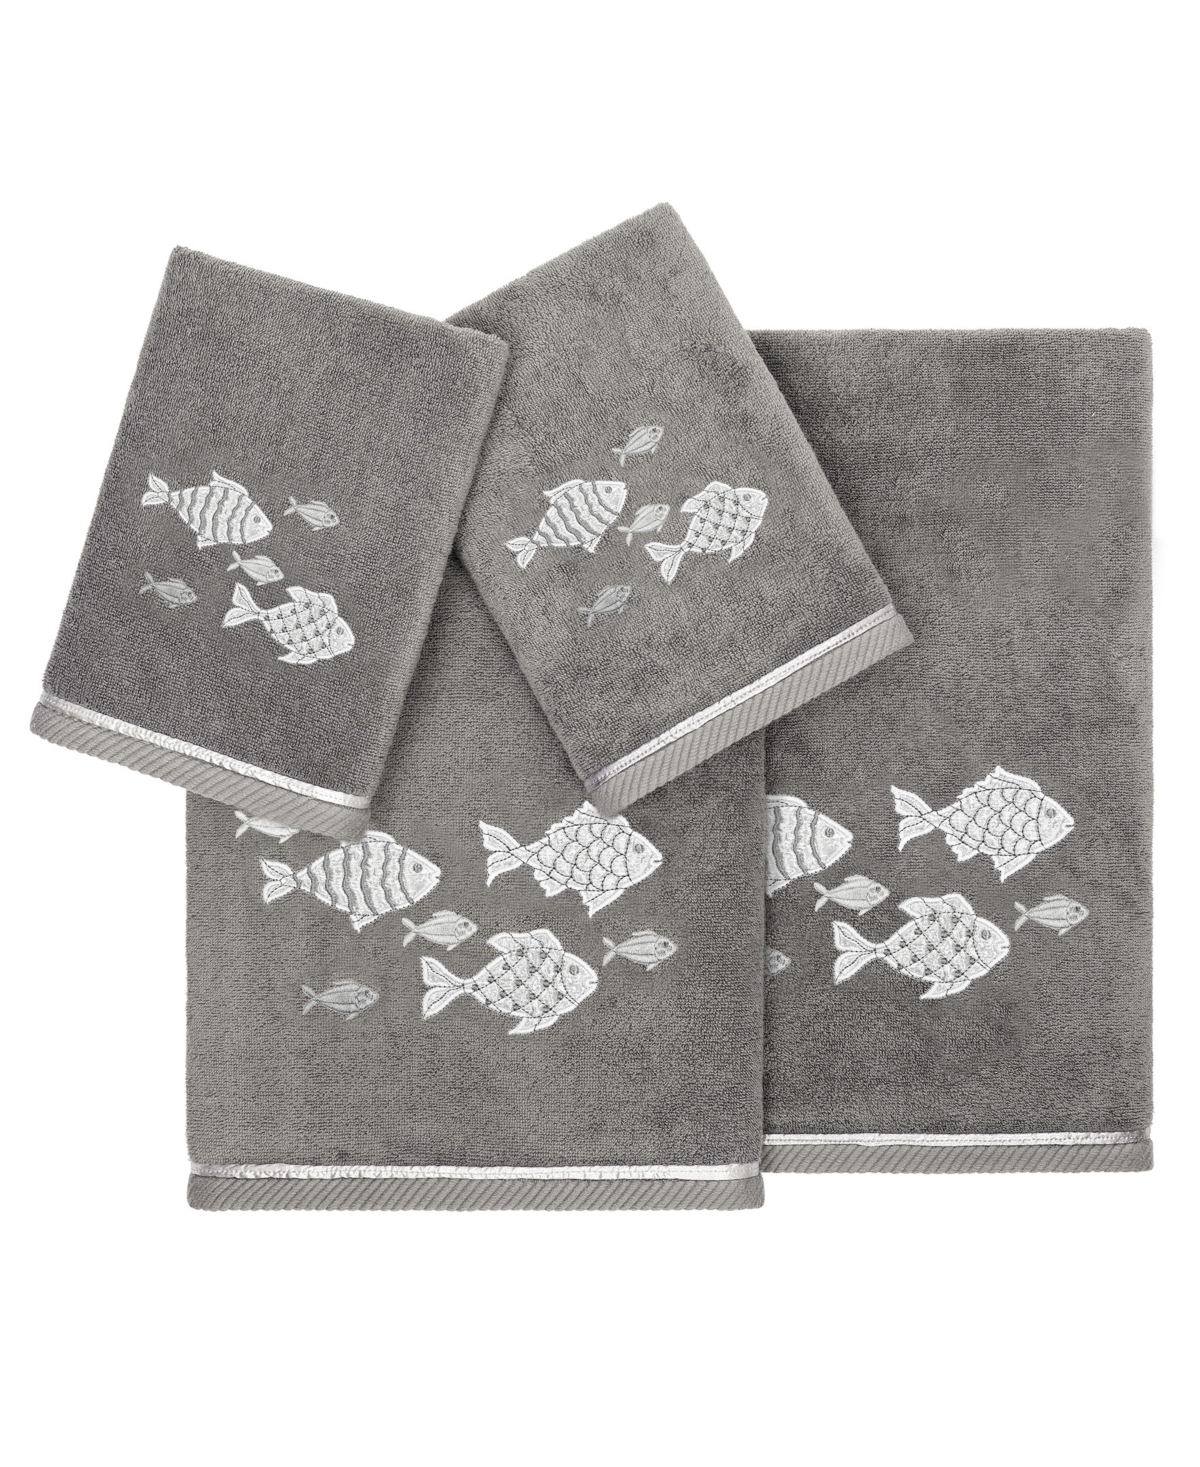 Linum Home Textiles Turkish Cotton Figi Embellished Towel Set, 4 Piece Bedding In Charcoal